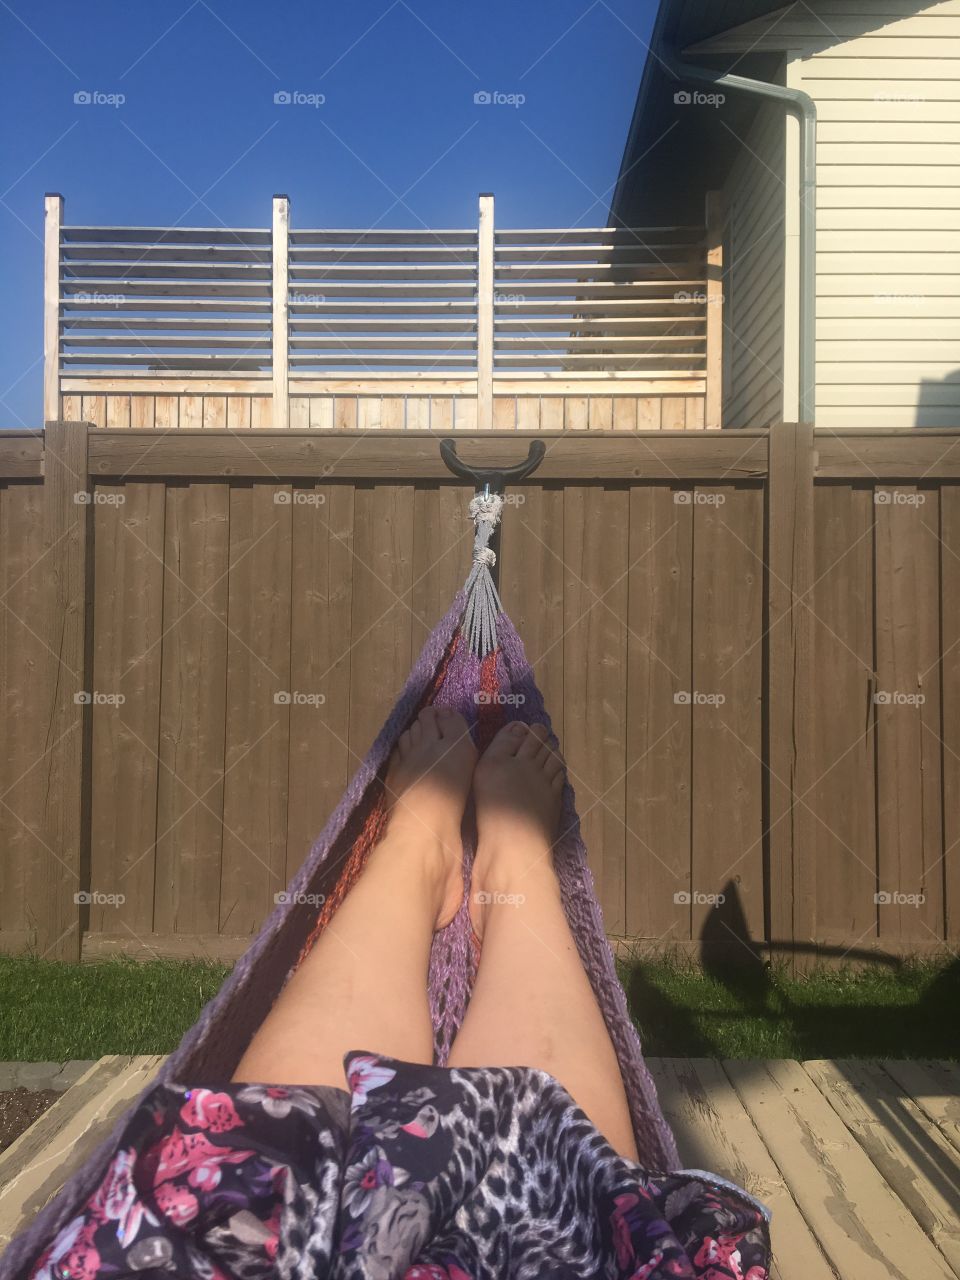 Life in a hammock 